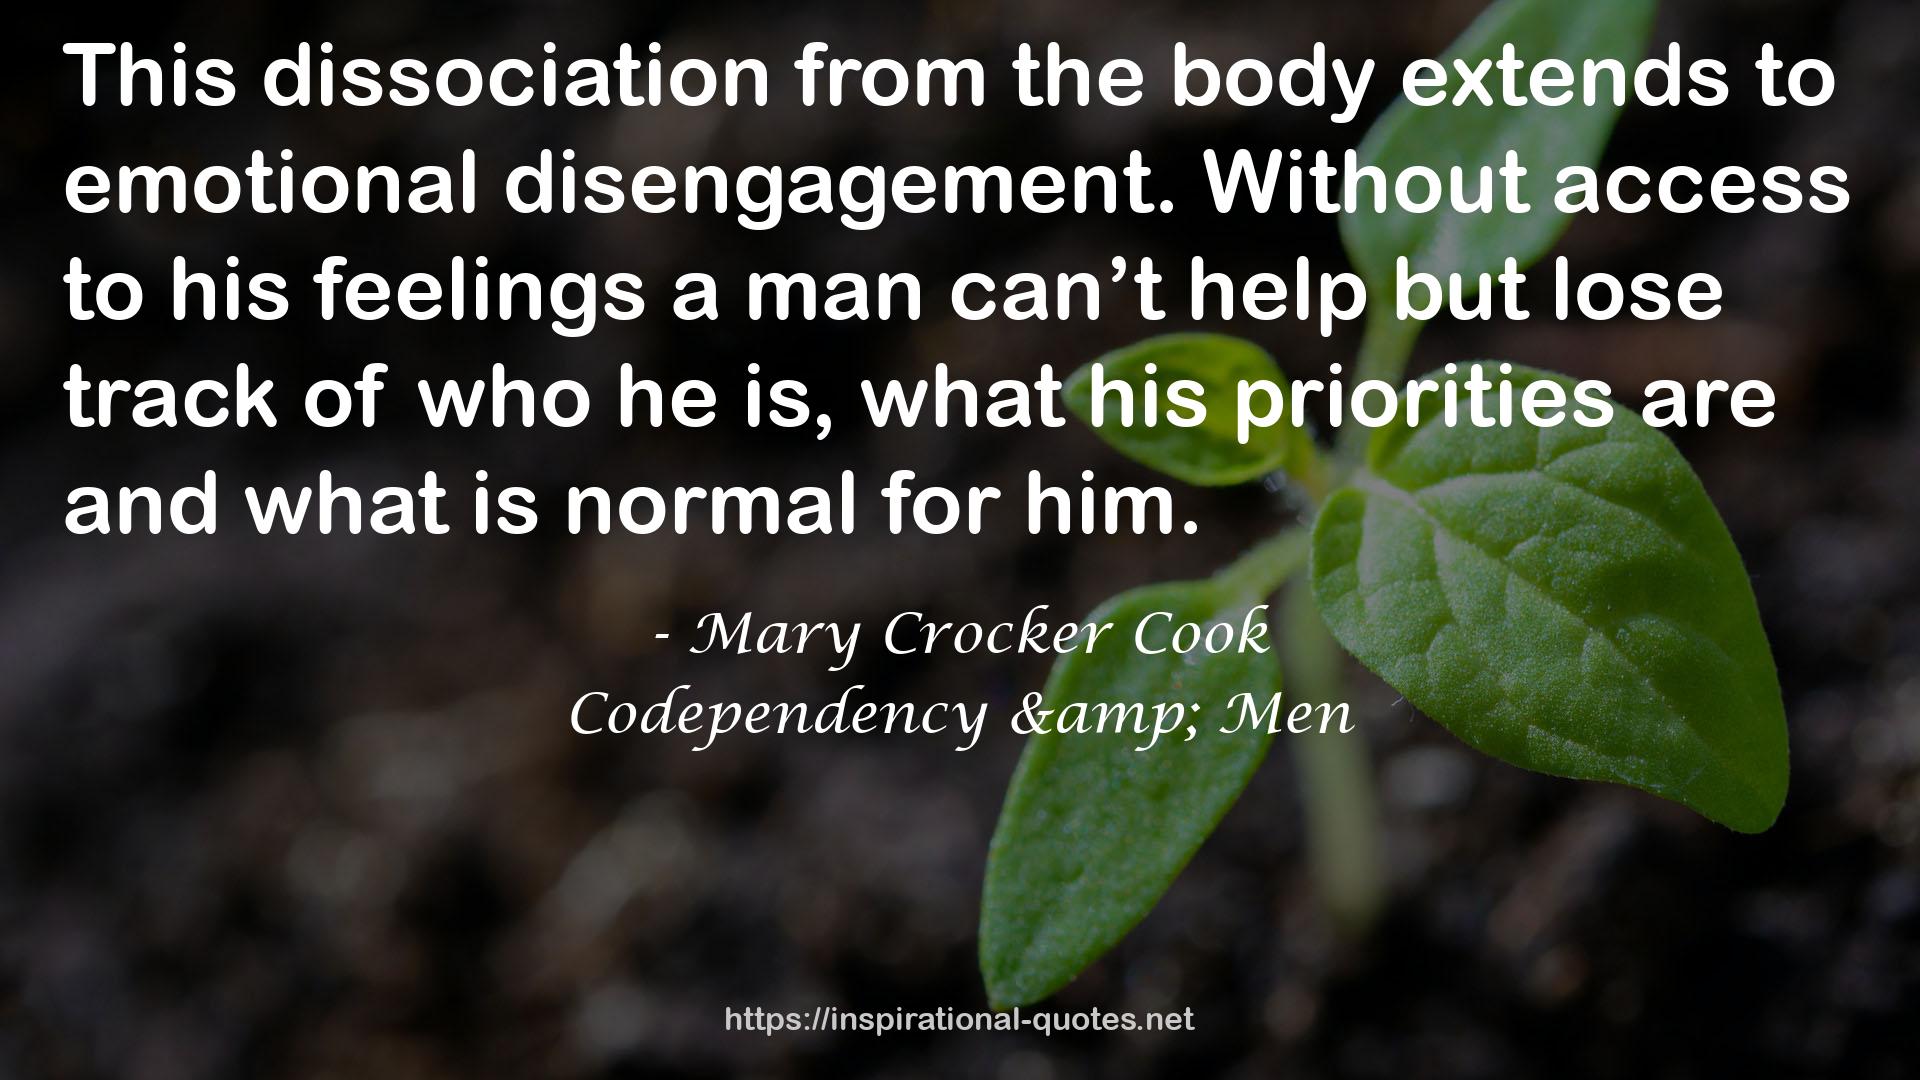 Codependency & Men QUOTES